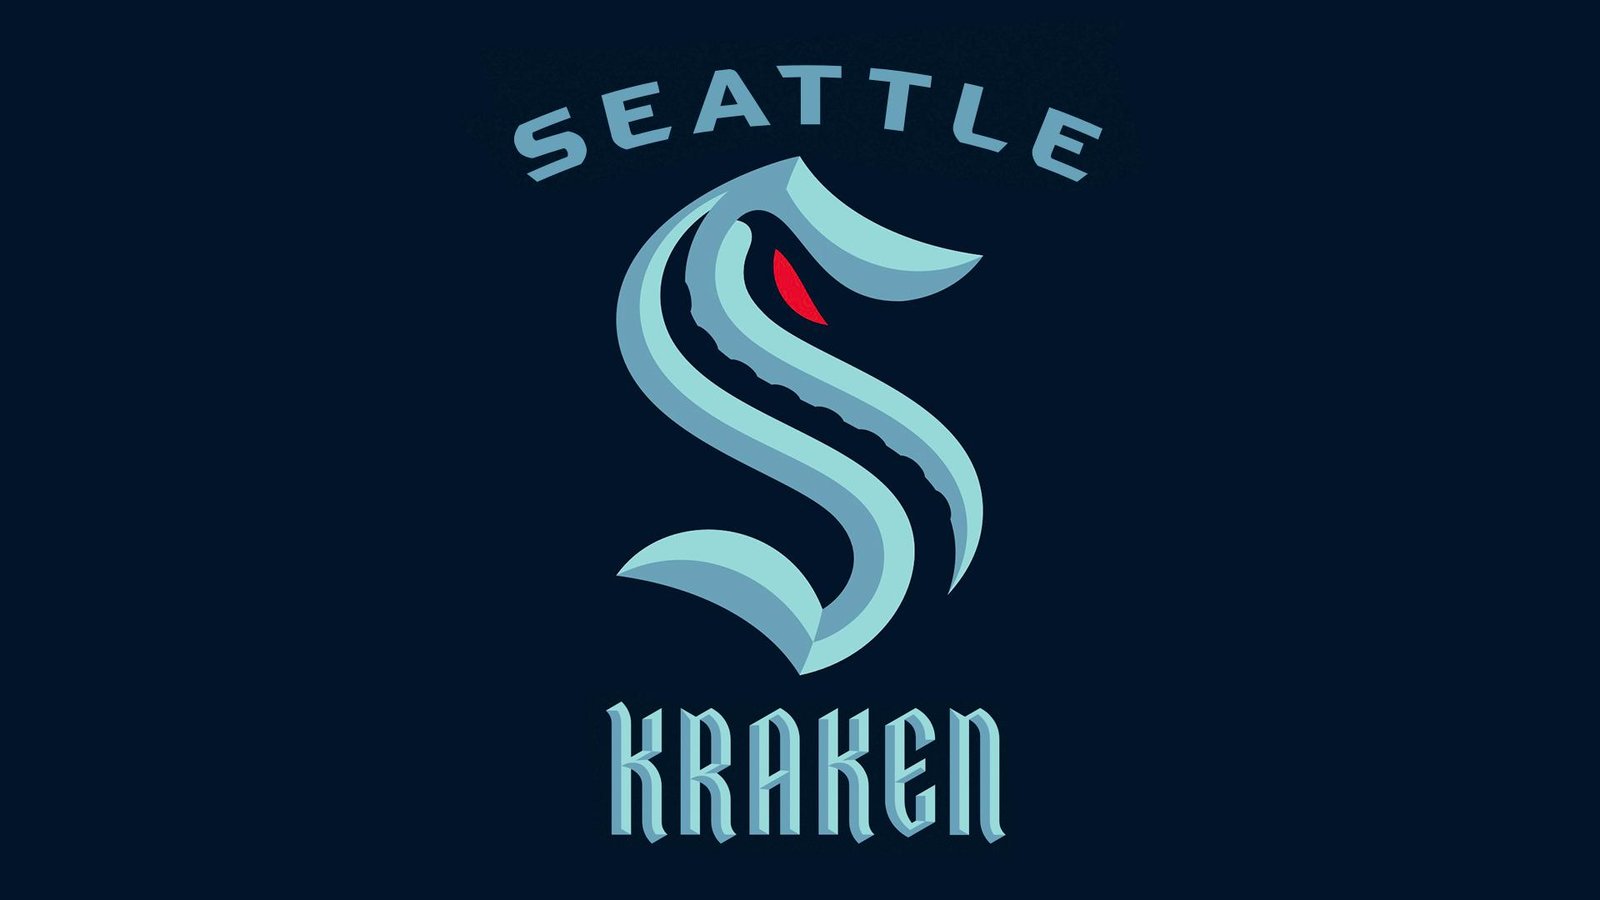 Take a sneak peek at the first Kraken jersey